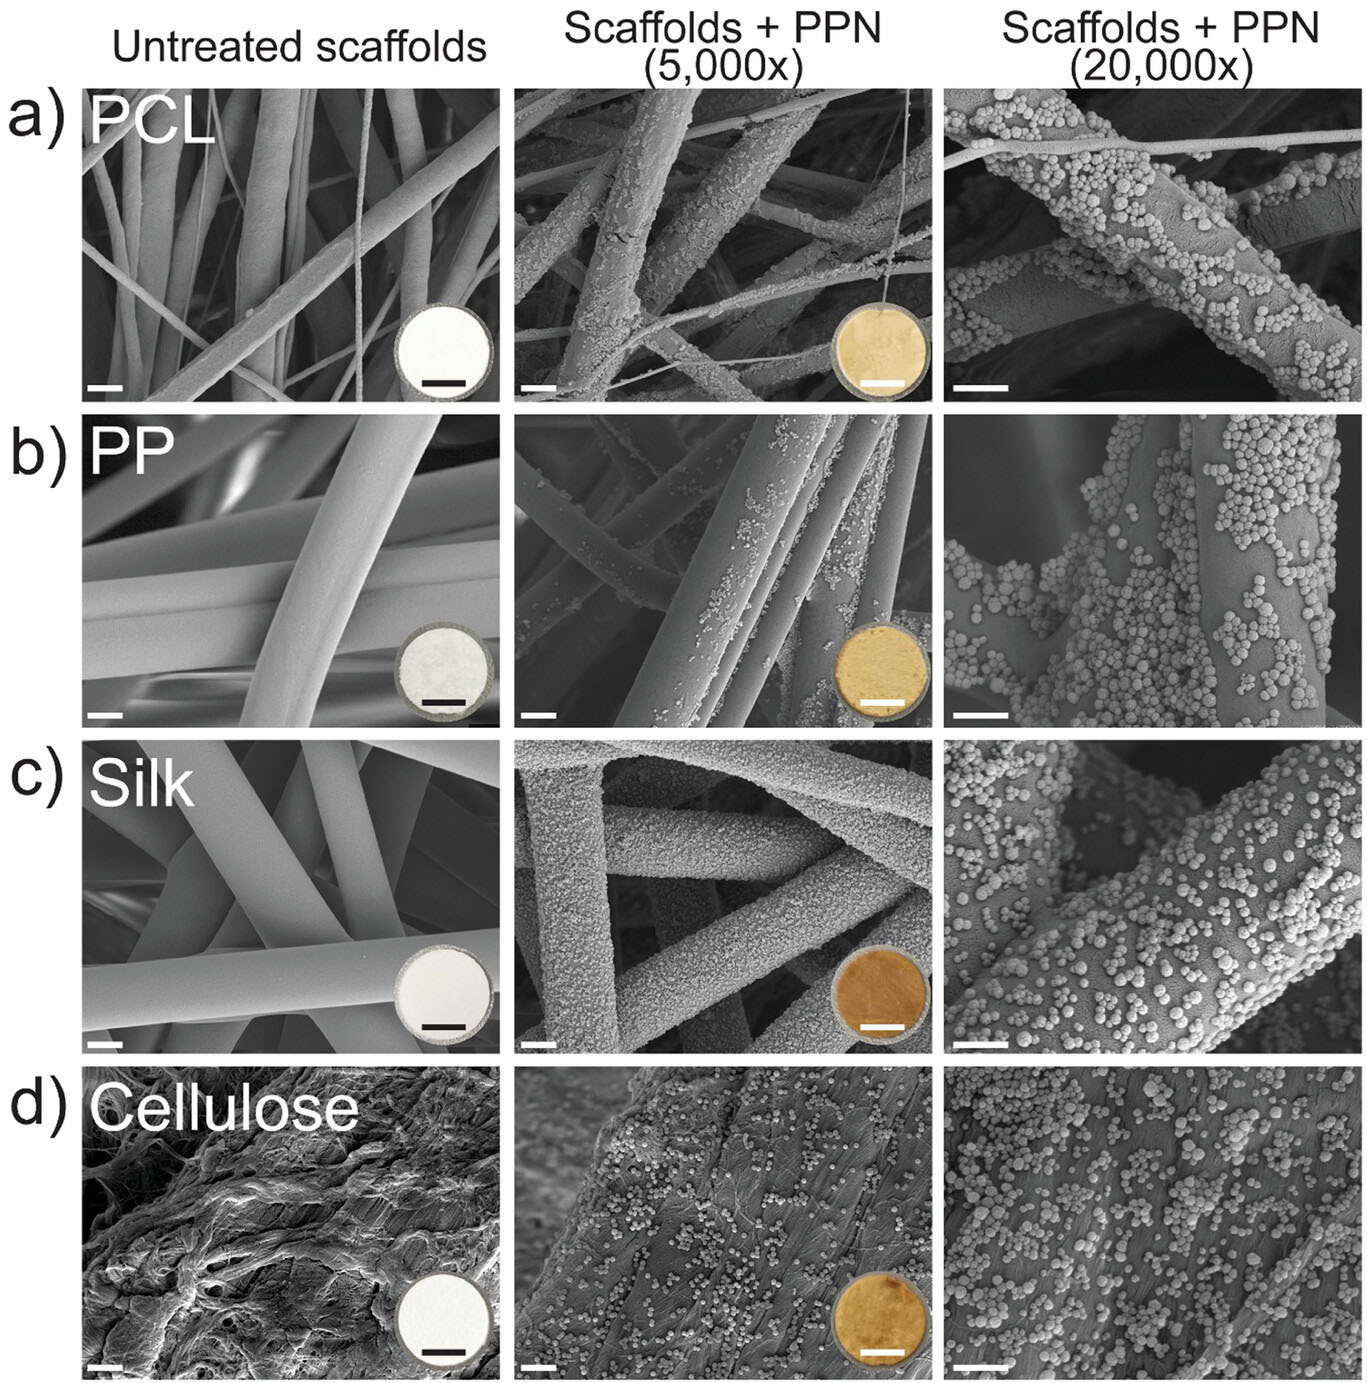 electrospun fibers with plasma polymerized nanoparticles